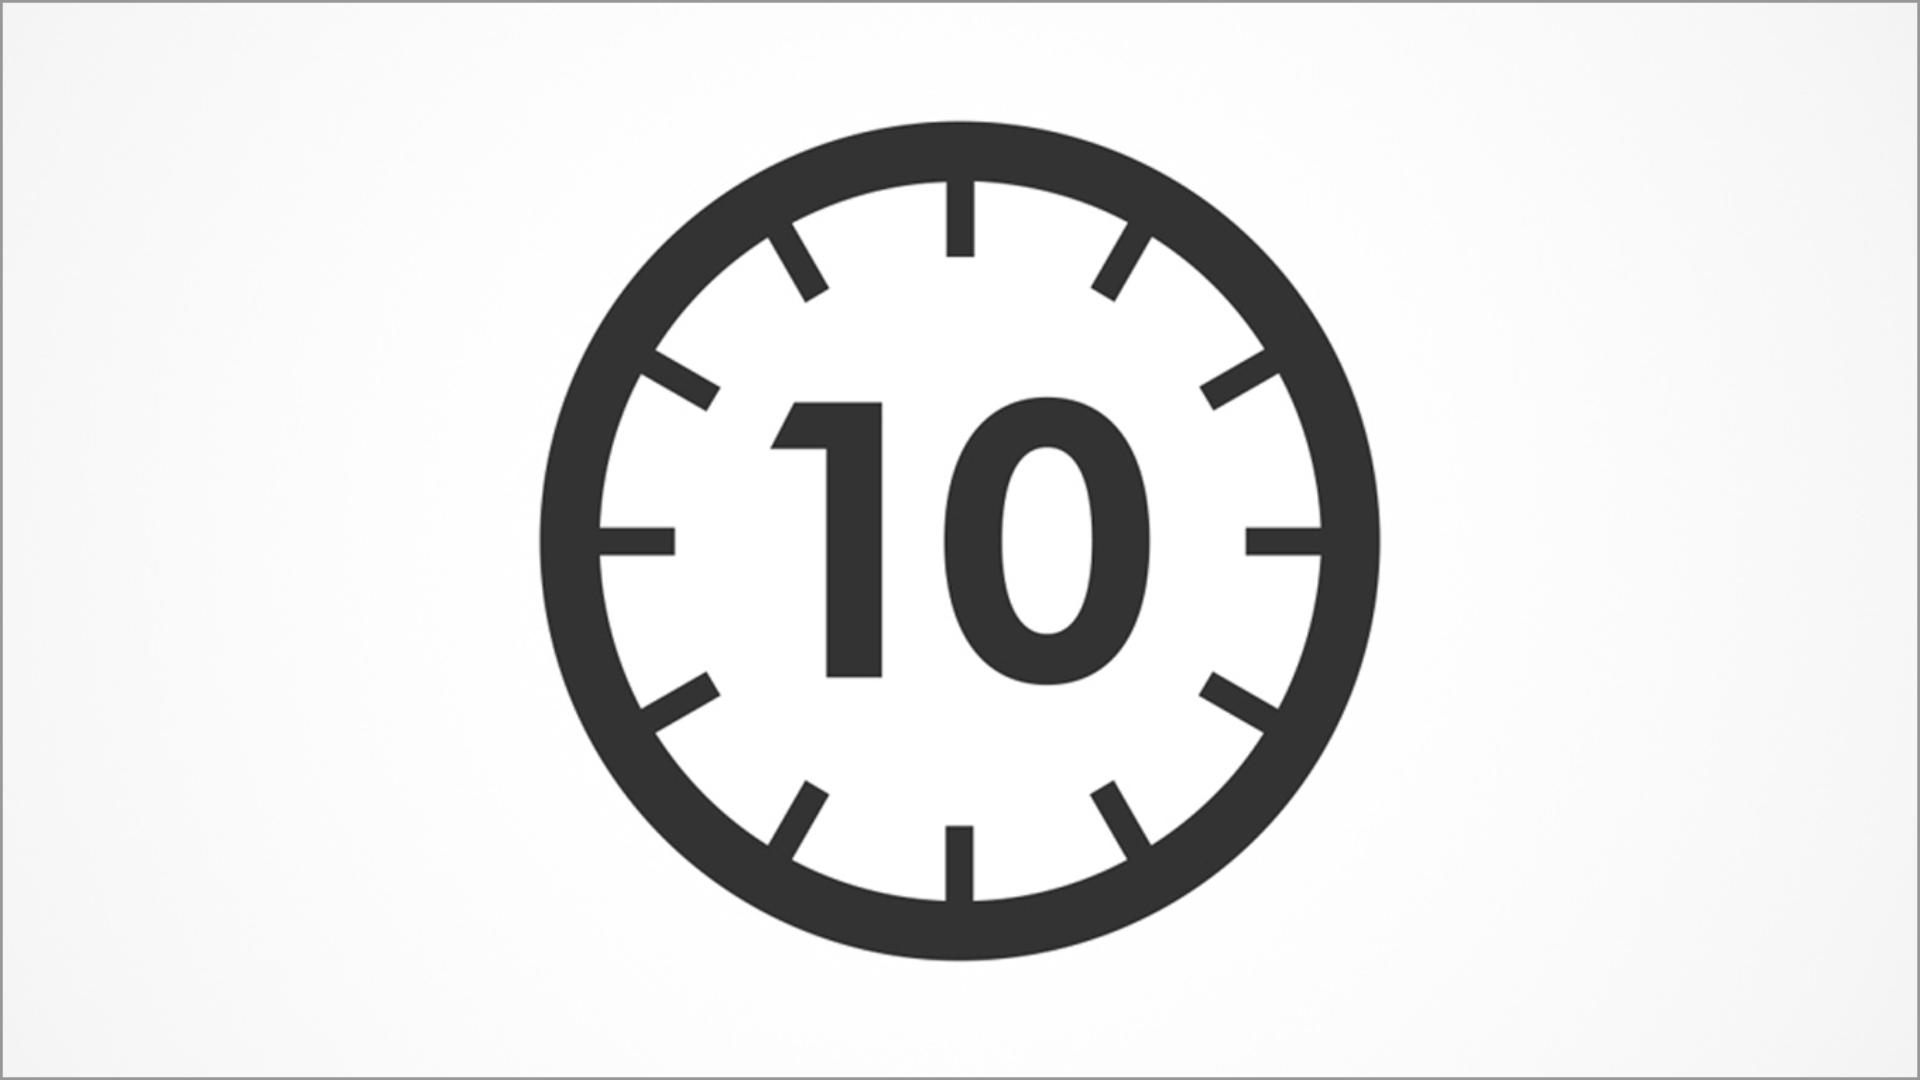 10 second icon